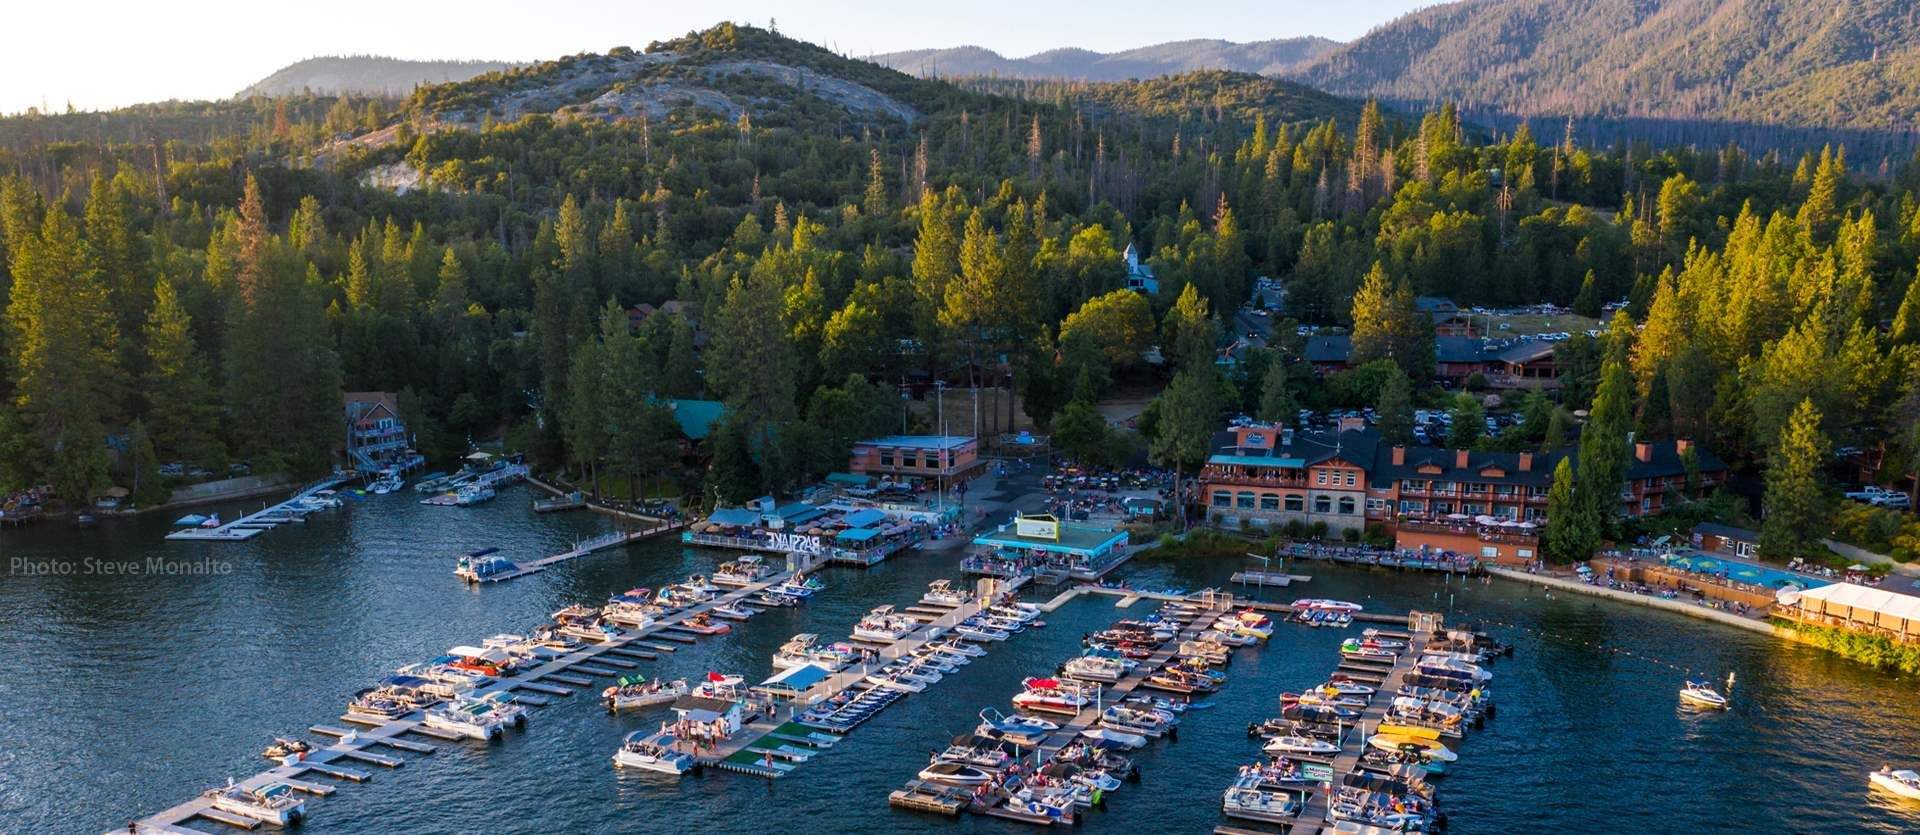 The Pines Resort Bass Lake California